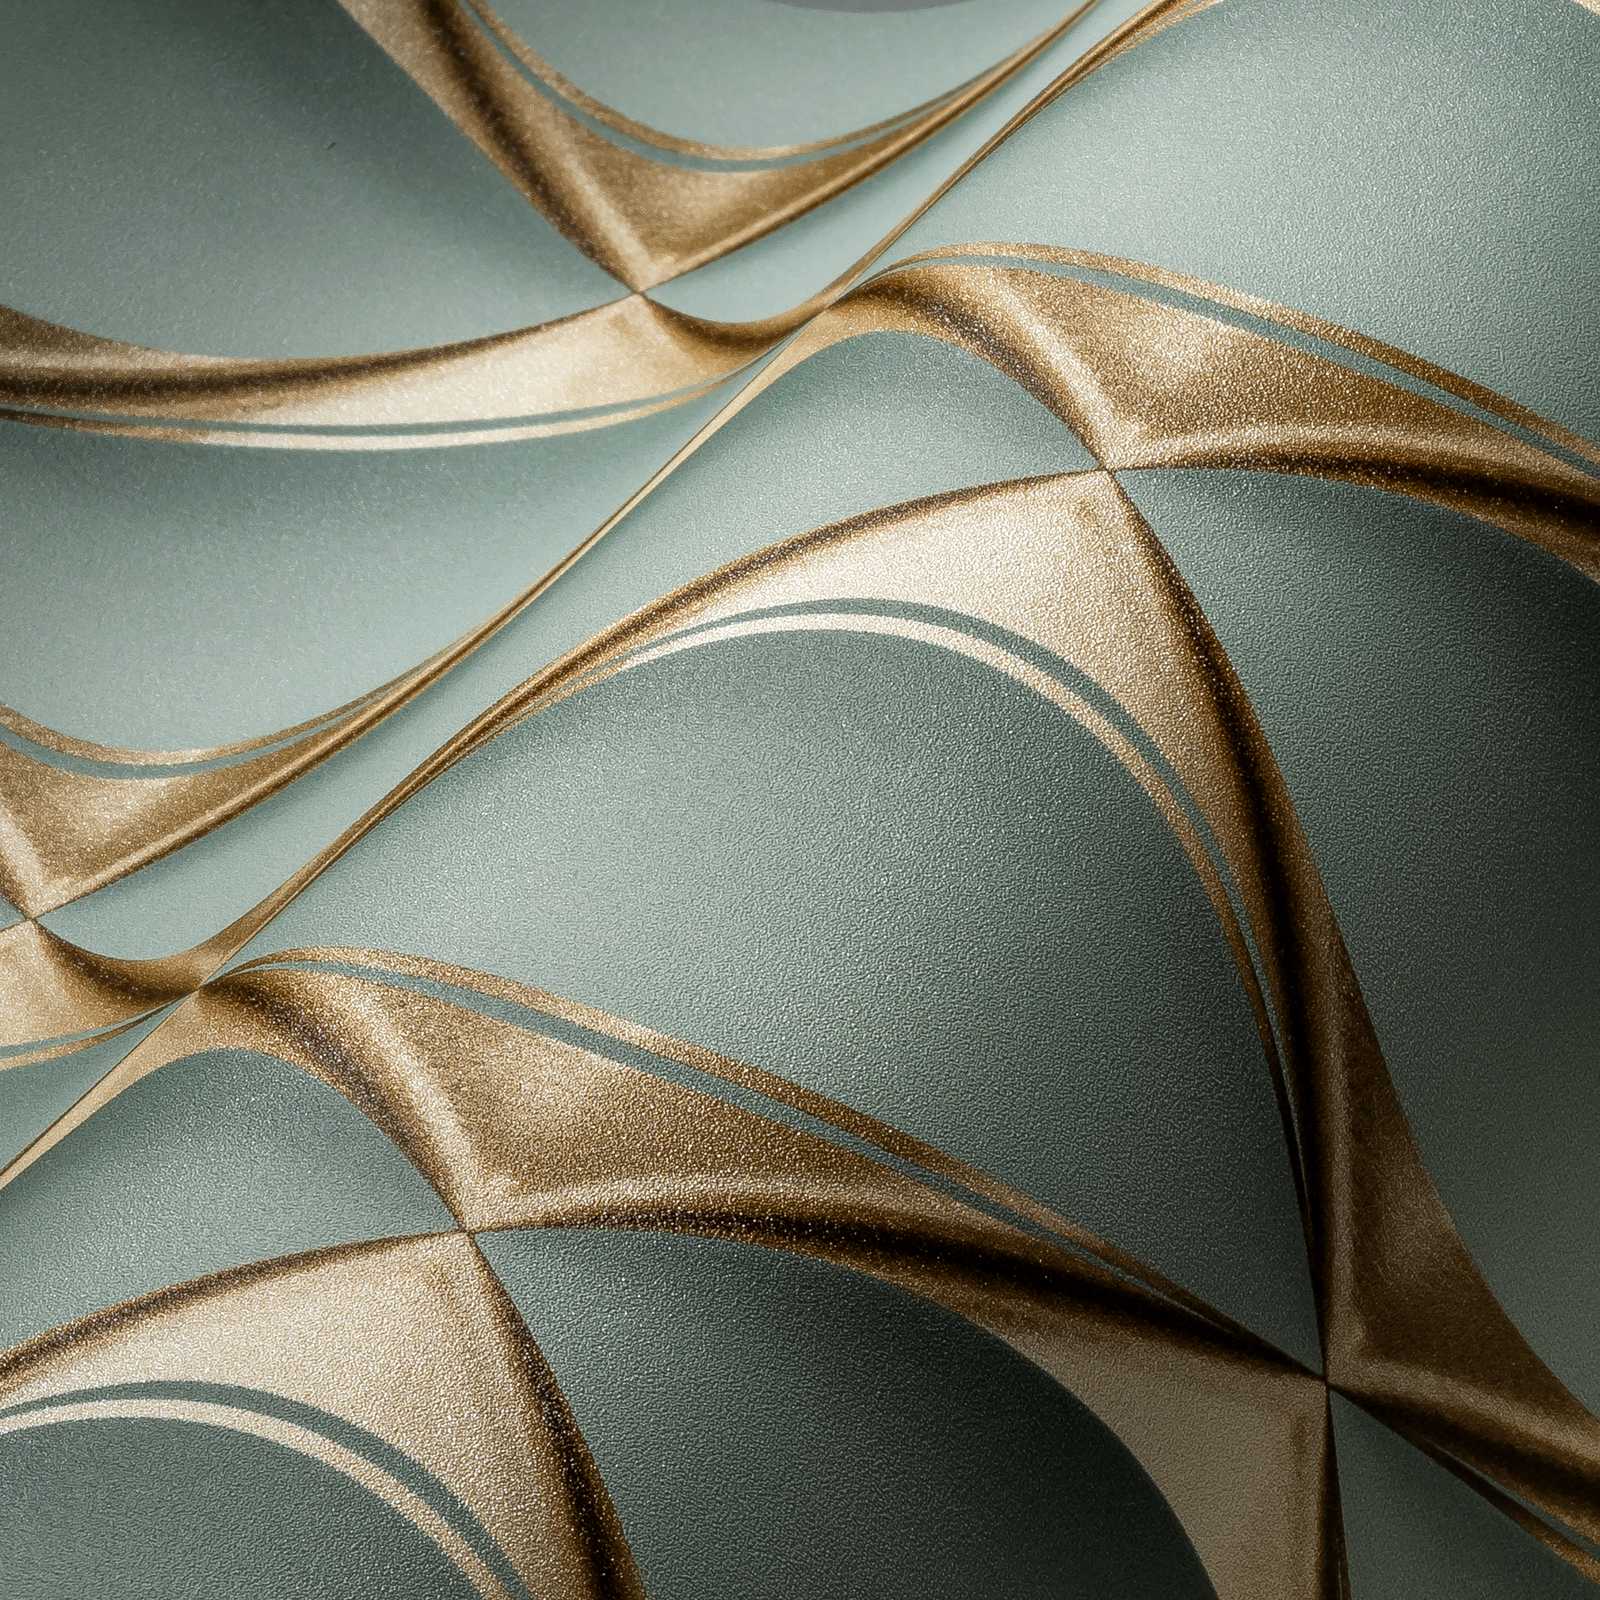             Wallpaper 3D design with metallic facets pattern - green, metallic
        